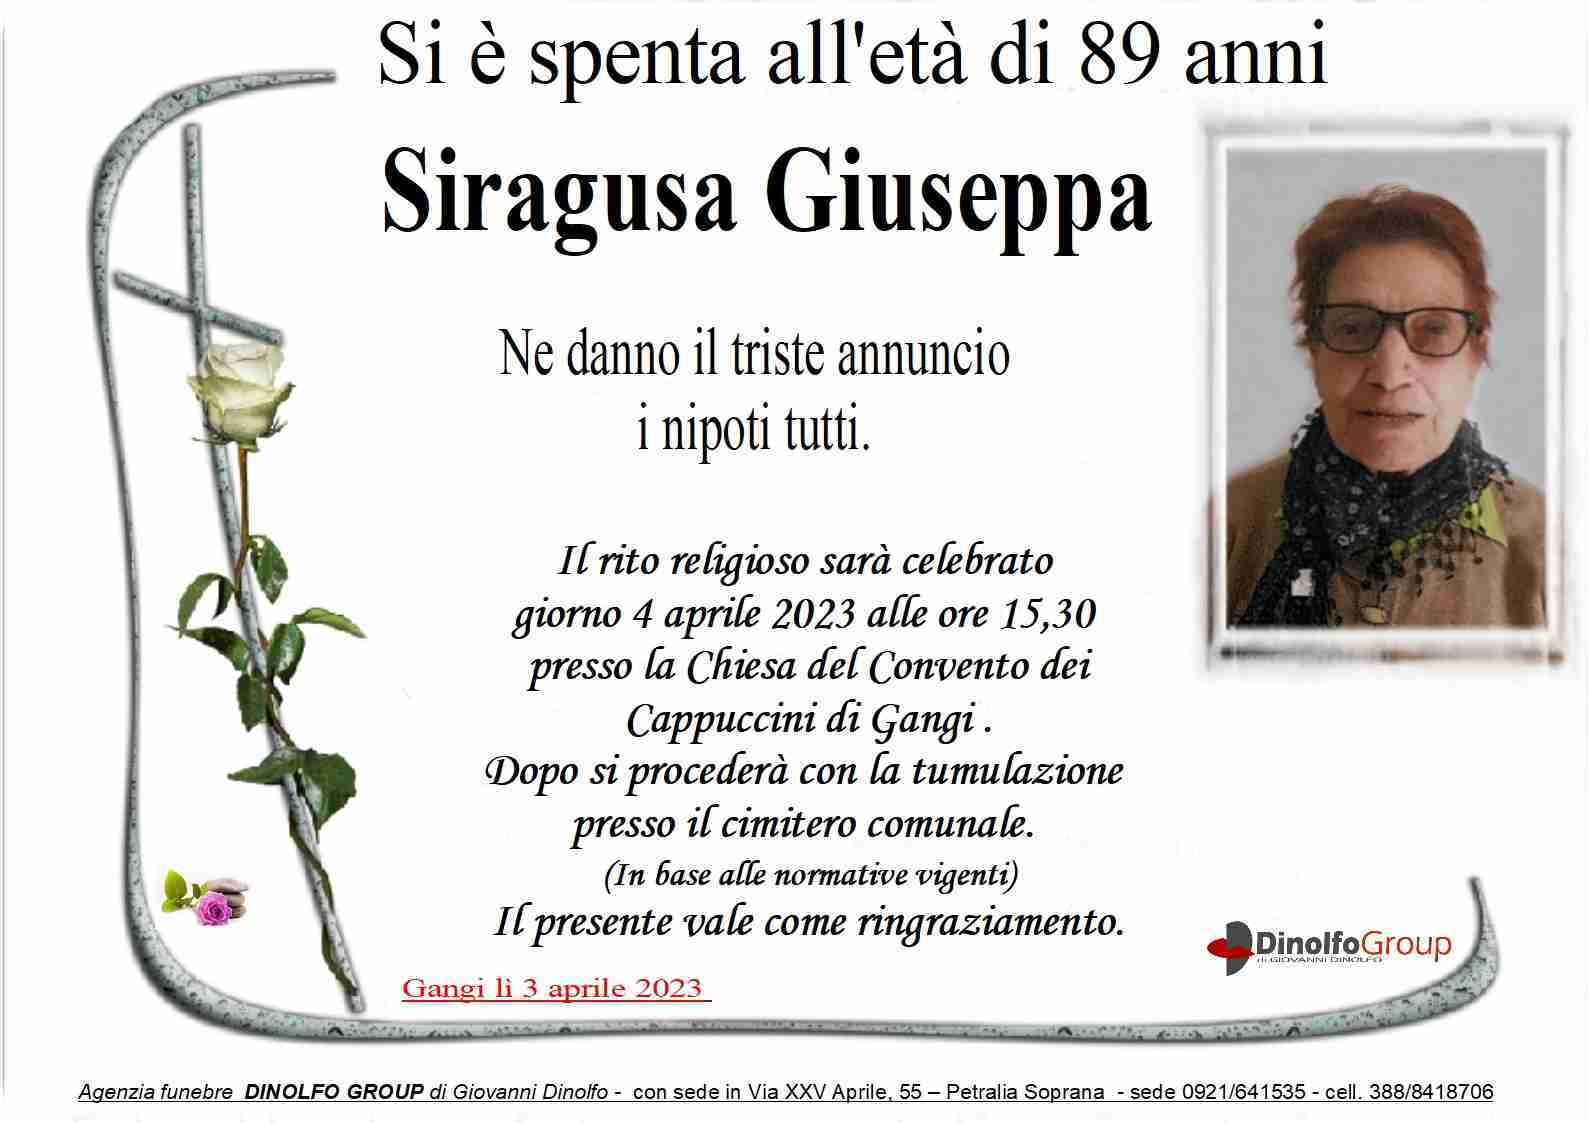 Giuseppa Siragusa